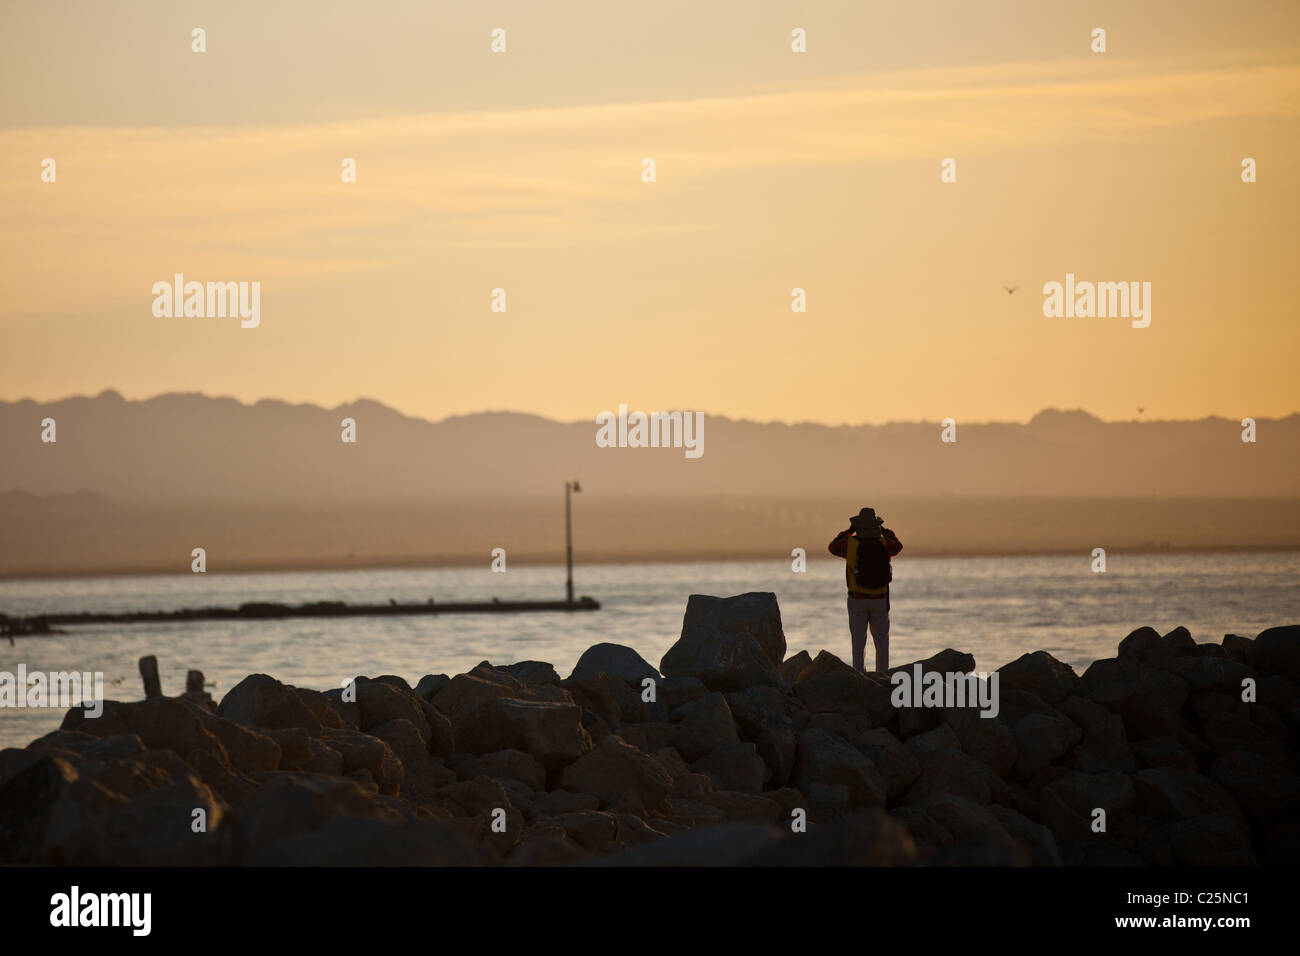 Birdwatcher along the coast of the Salton Sea Imperial Valley, CA. Stock Photo